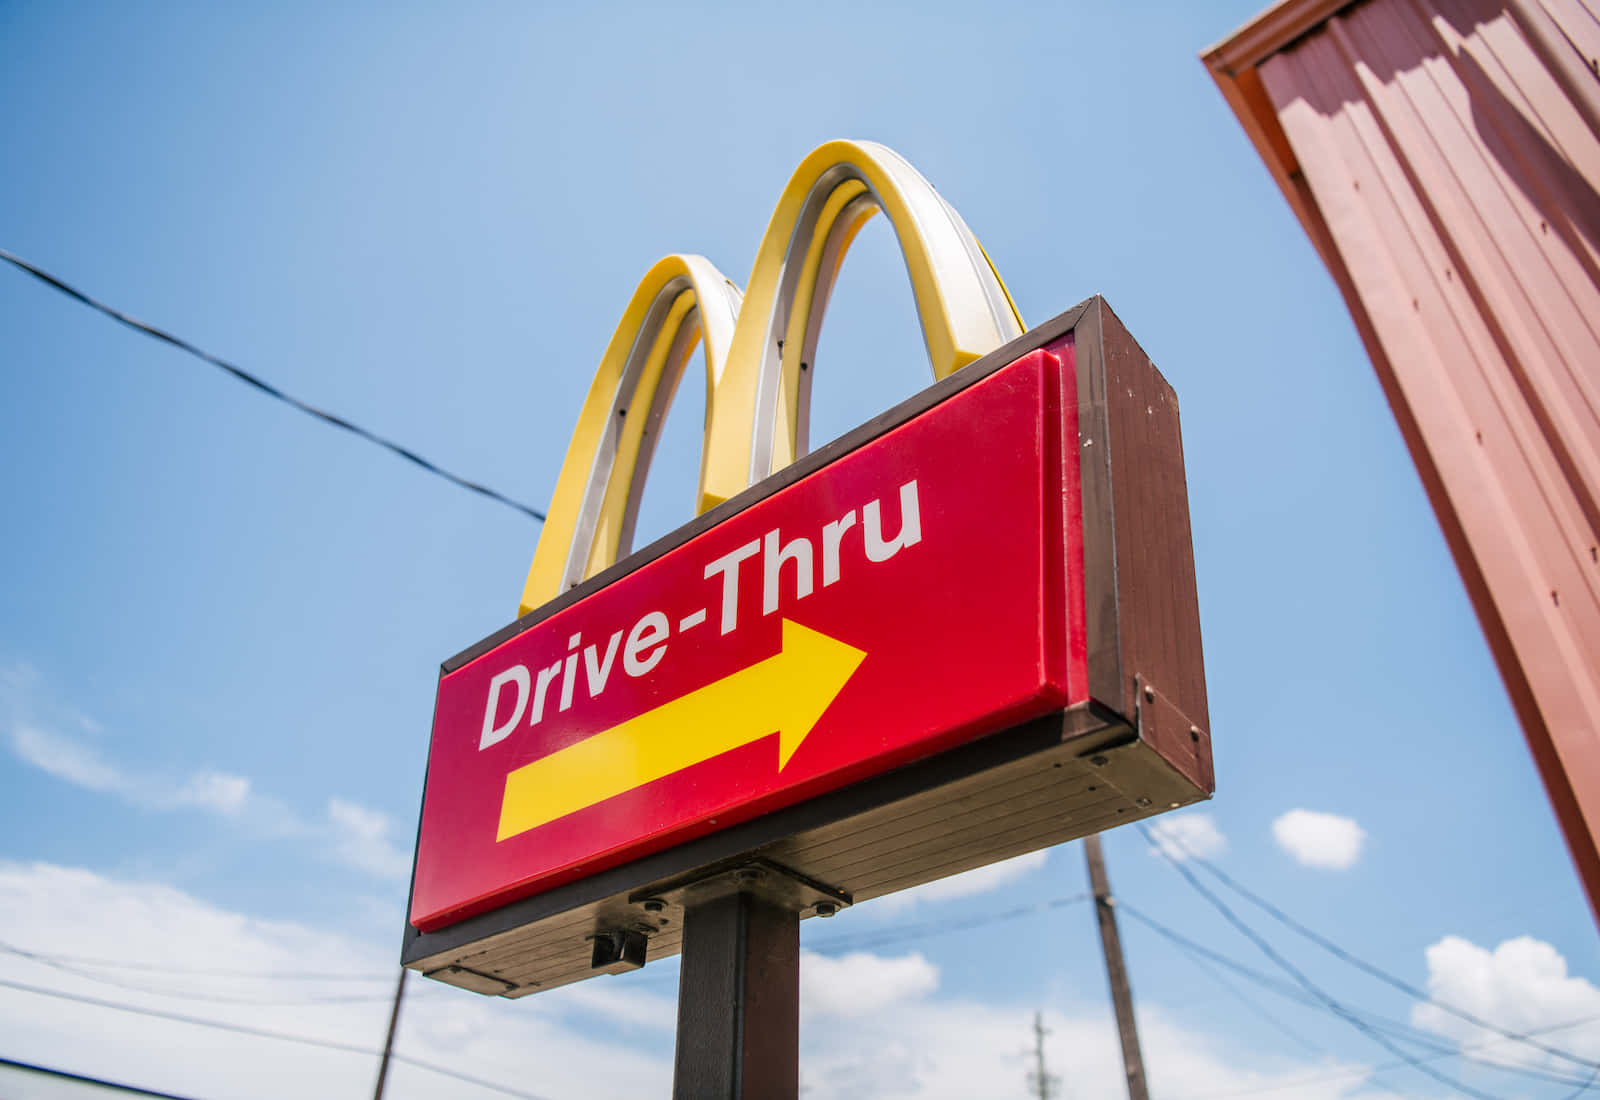 A Mcdonald's Drive Thru Sign Is Shown